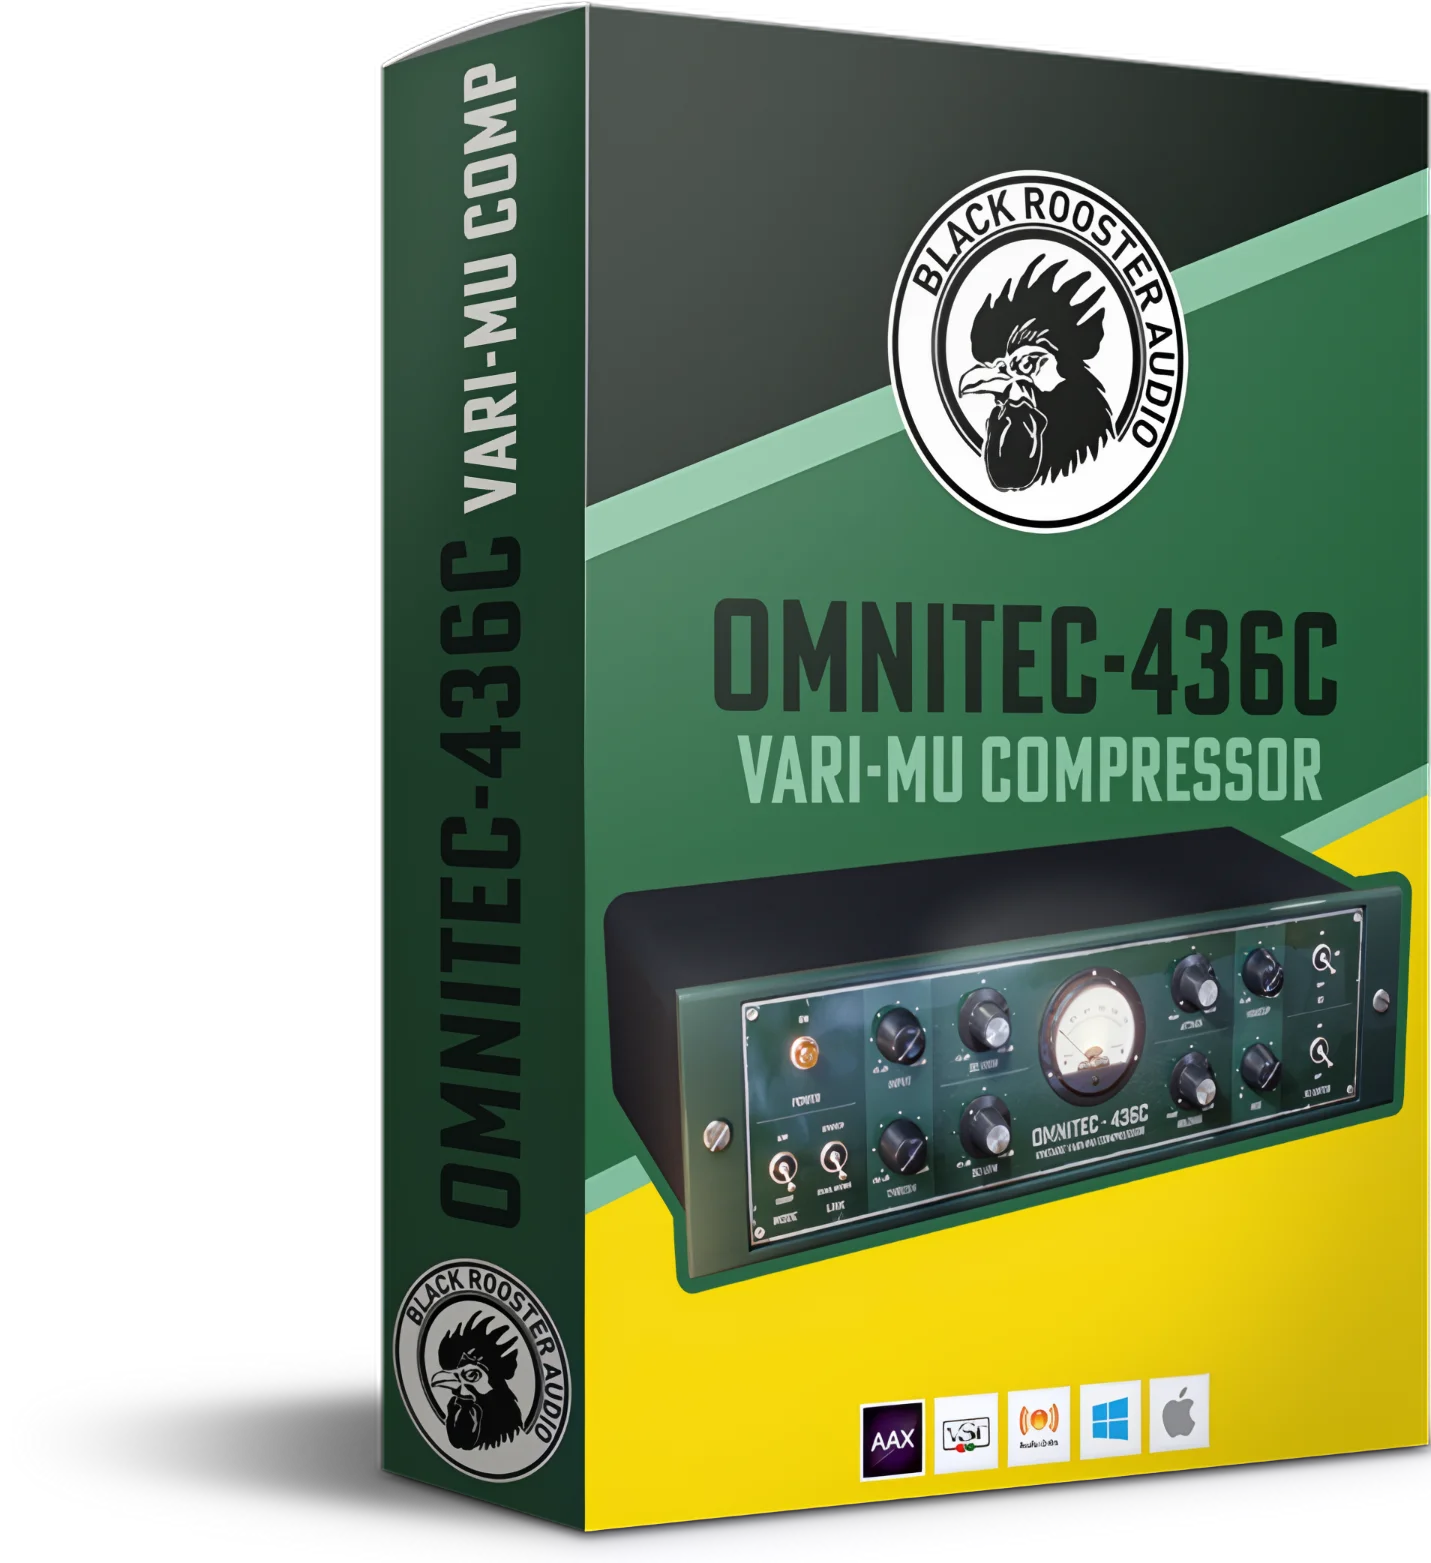 58% off “OmniTec-436C Vari-Mu Compressor” by Black Rooster Audio